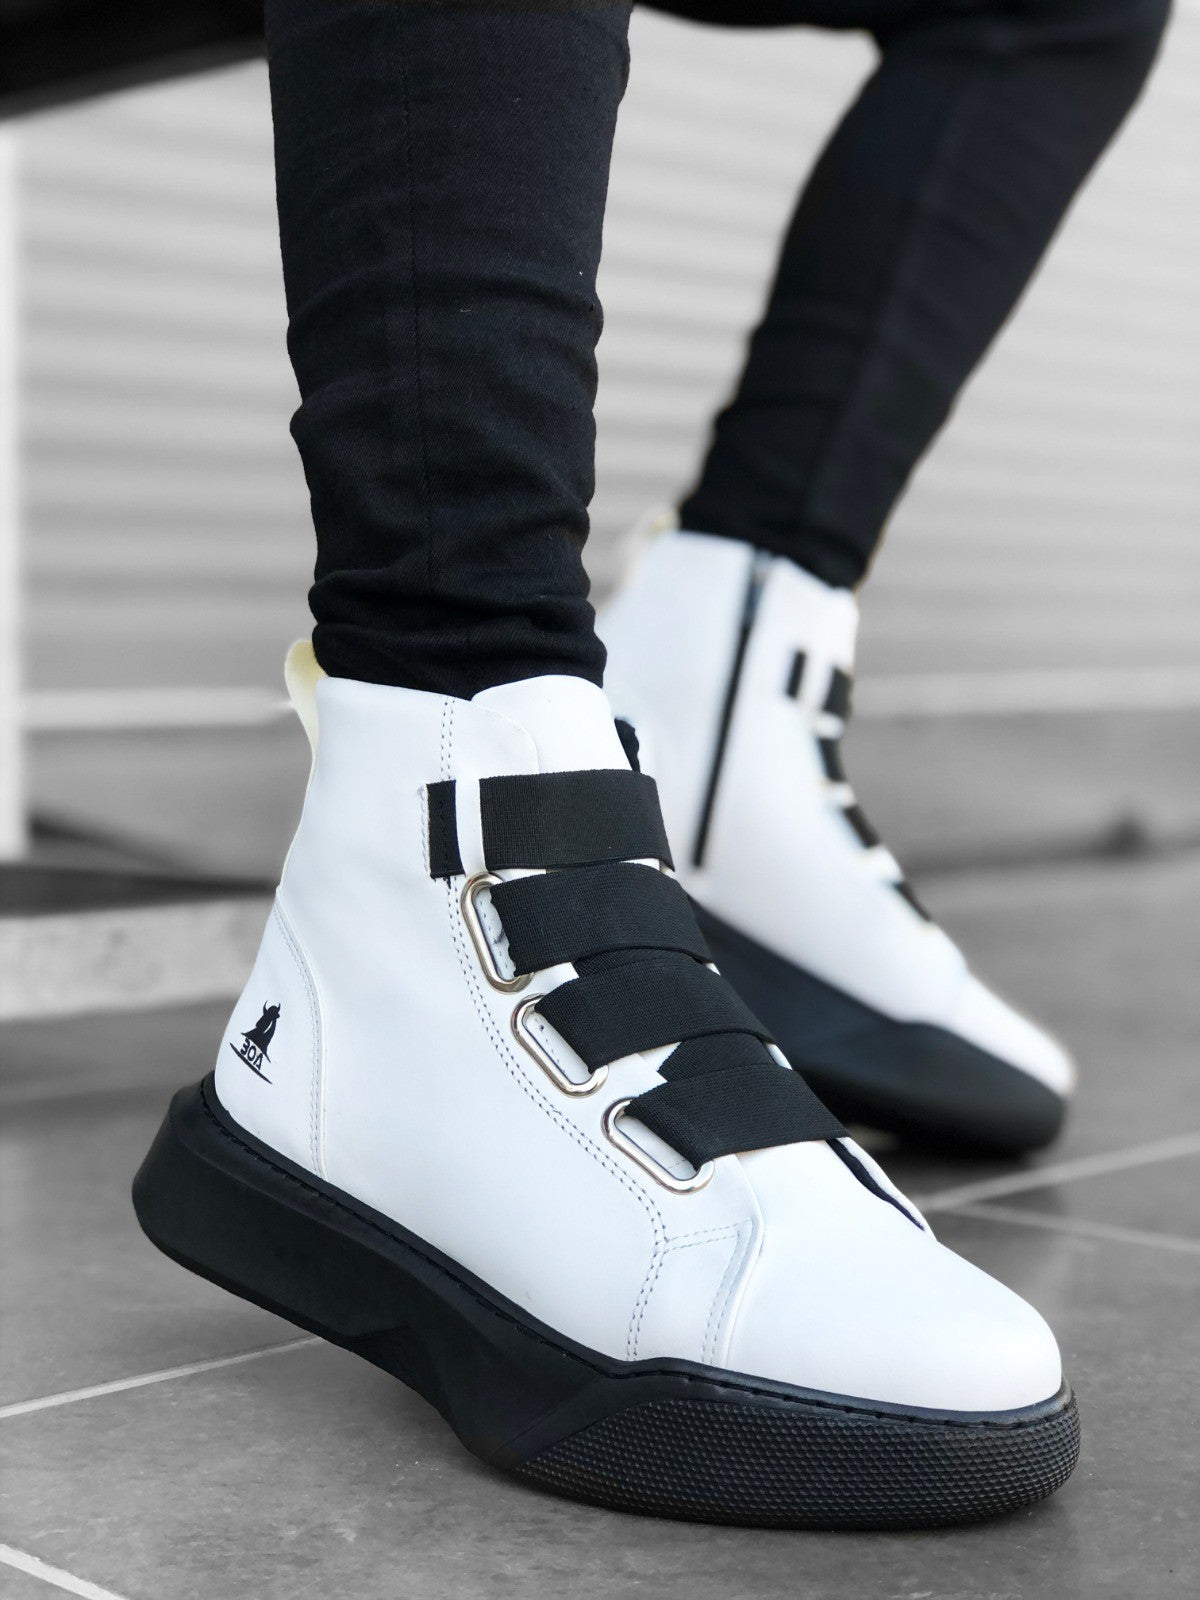 BA0142 Banded Men's High Sole Black Sport Boots - Men Fashion Sneaker Shoes Men's Sneaker Boots - STREETMODE ™